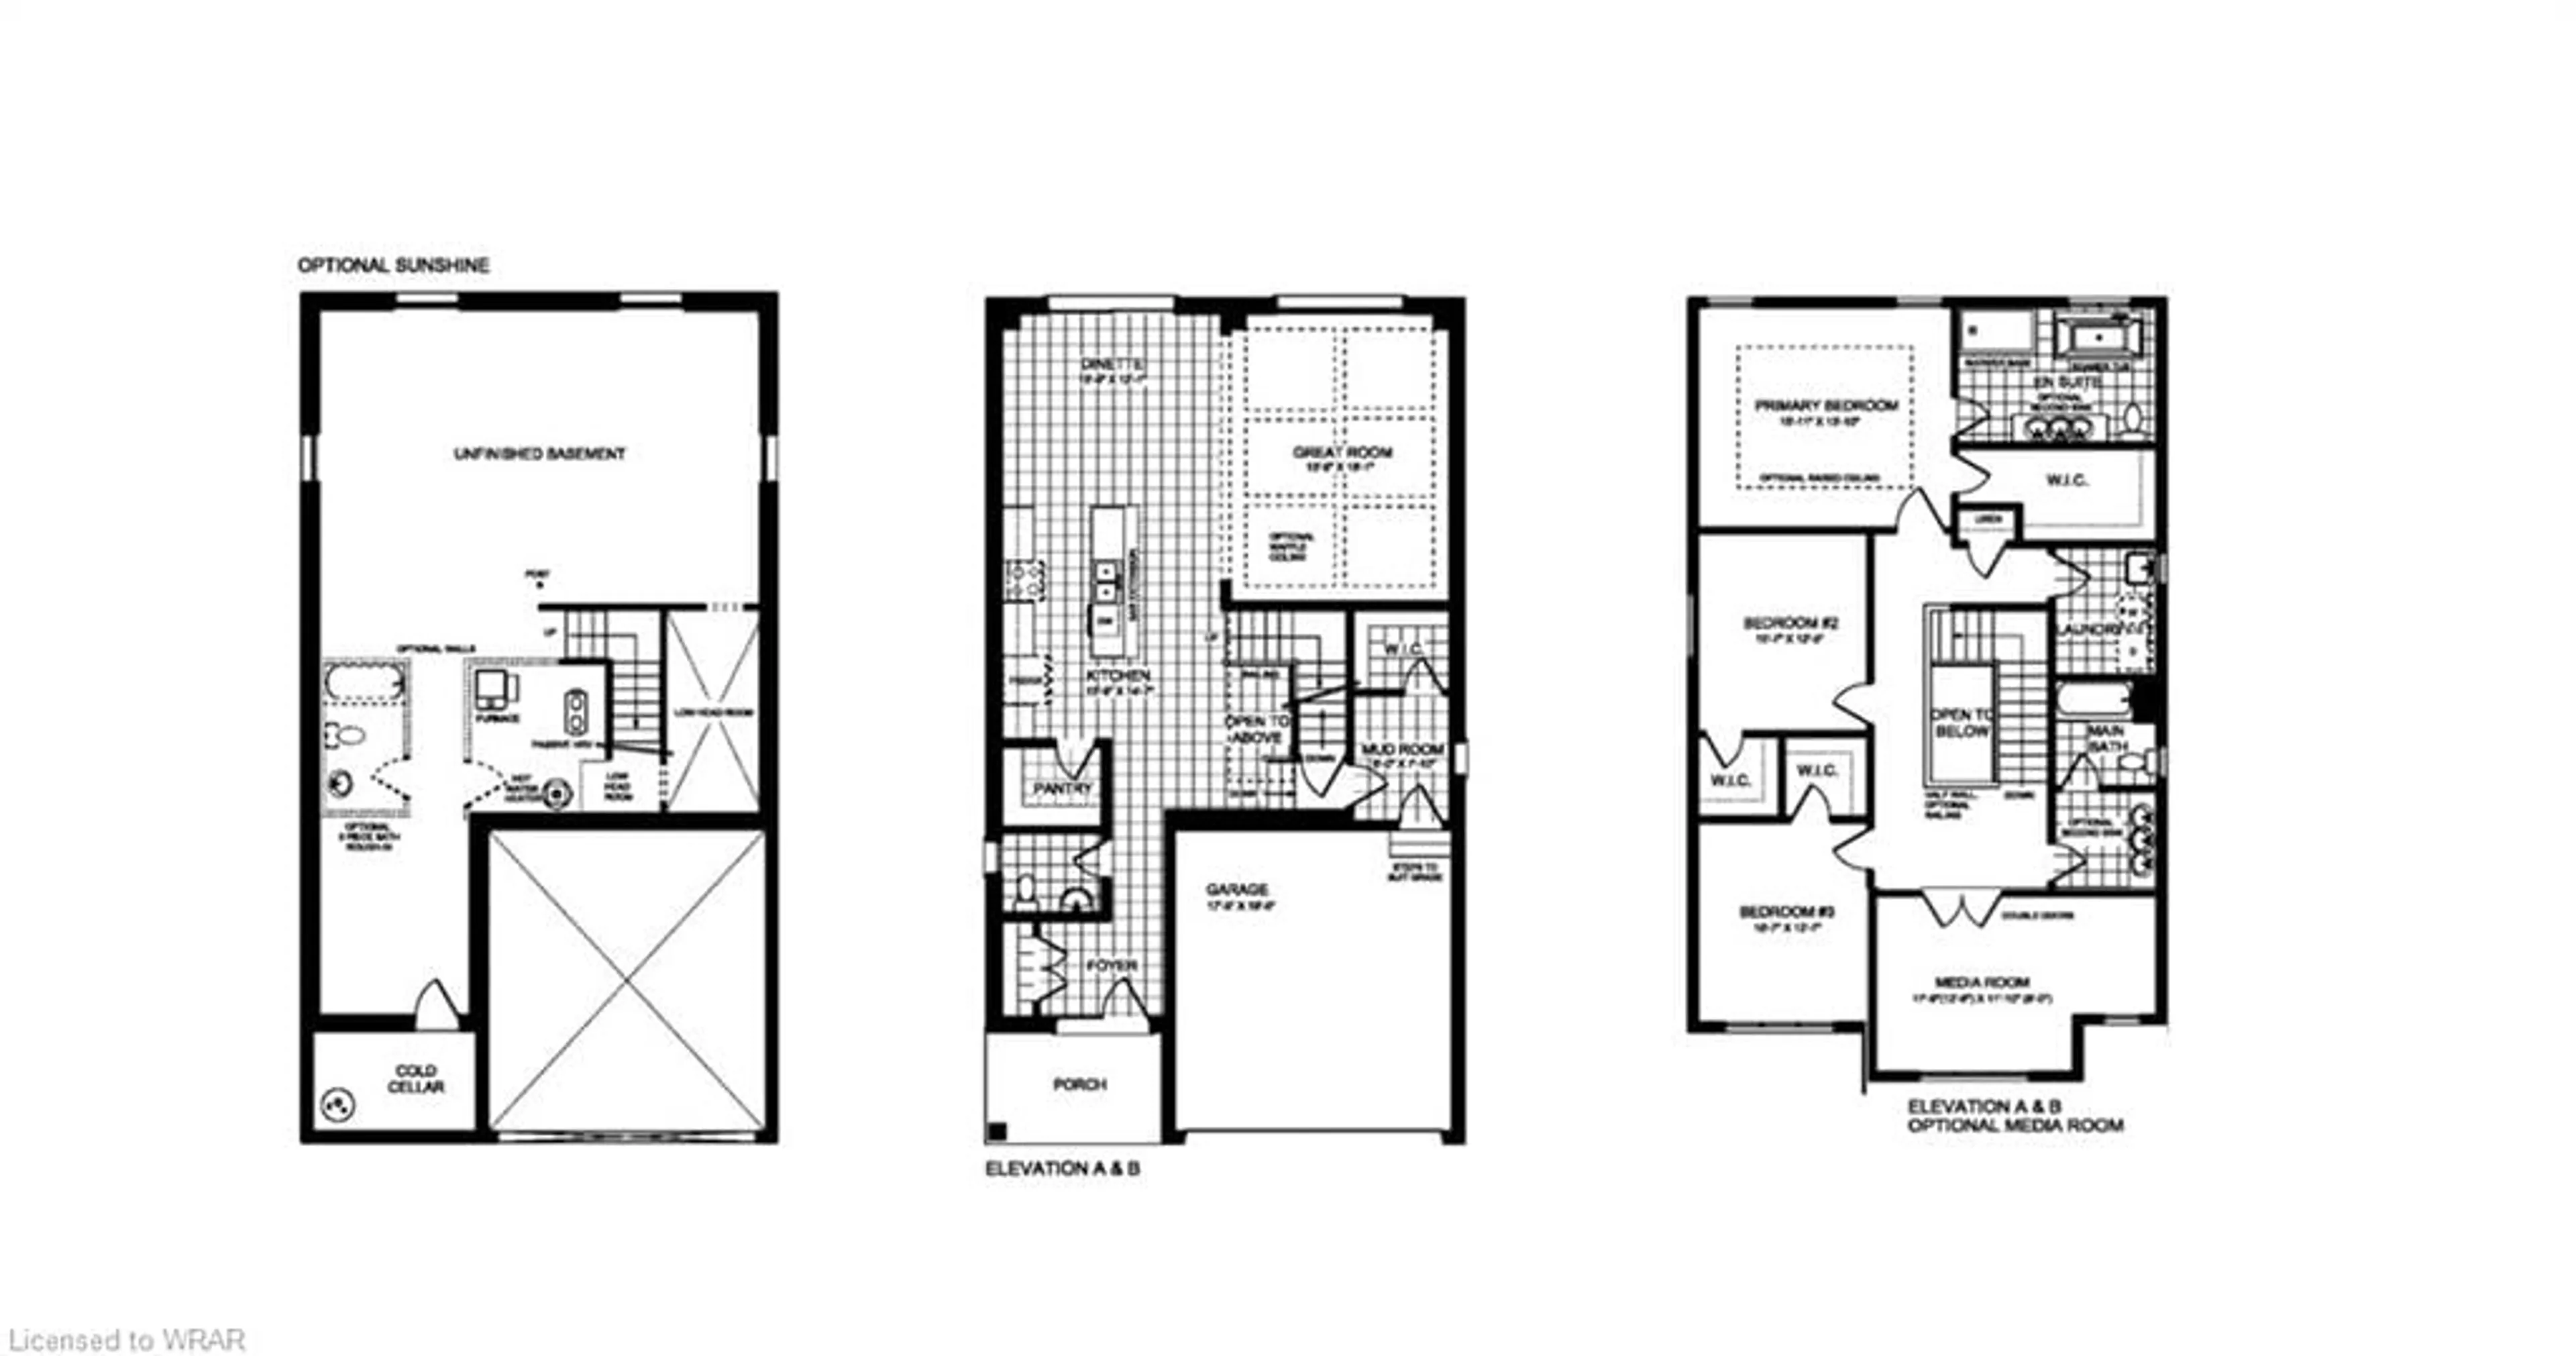 Floor plan for 443 Westhaven St, Waterloo Ontario N2T 0A4